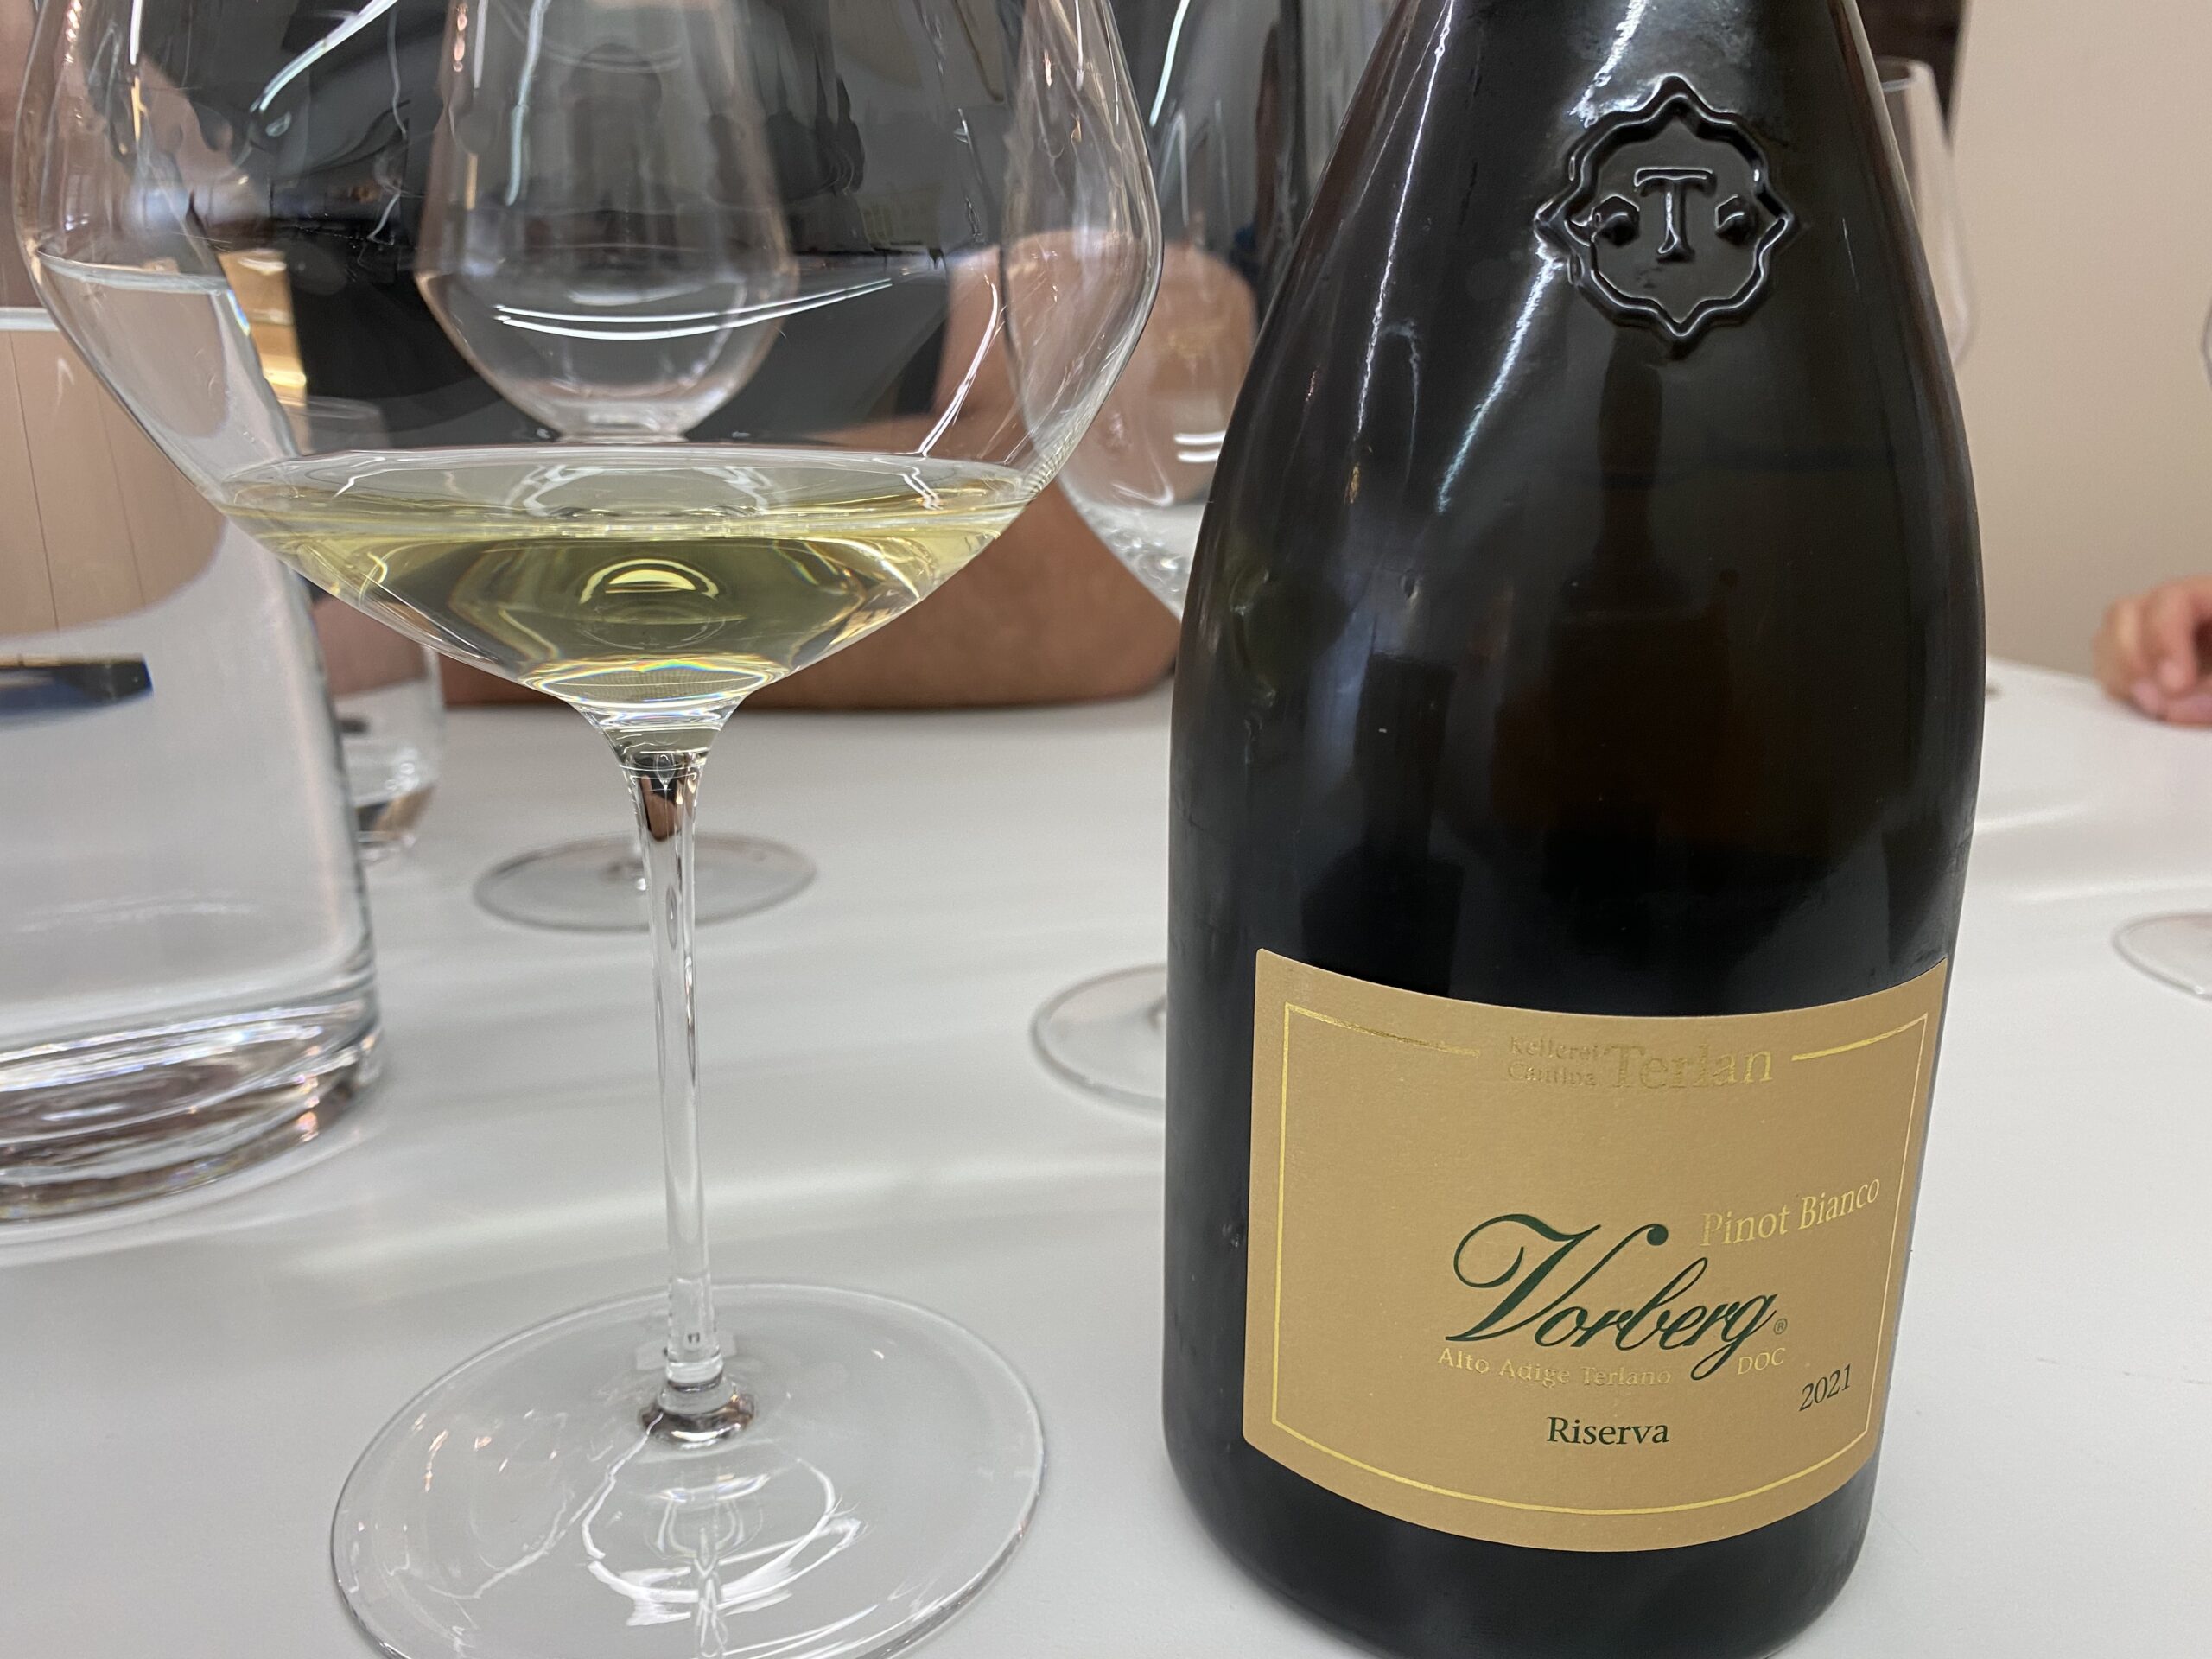 Vorberg Pinot Bianco Riserva 2021